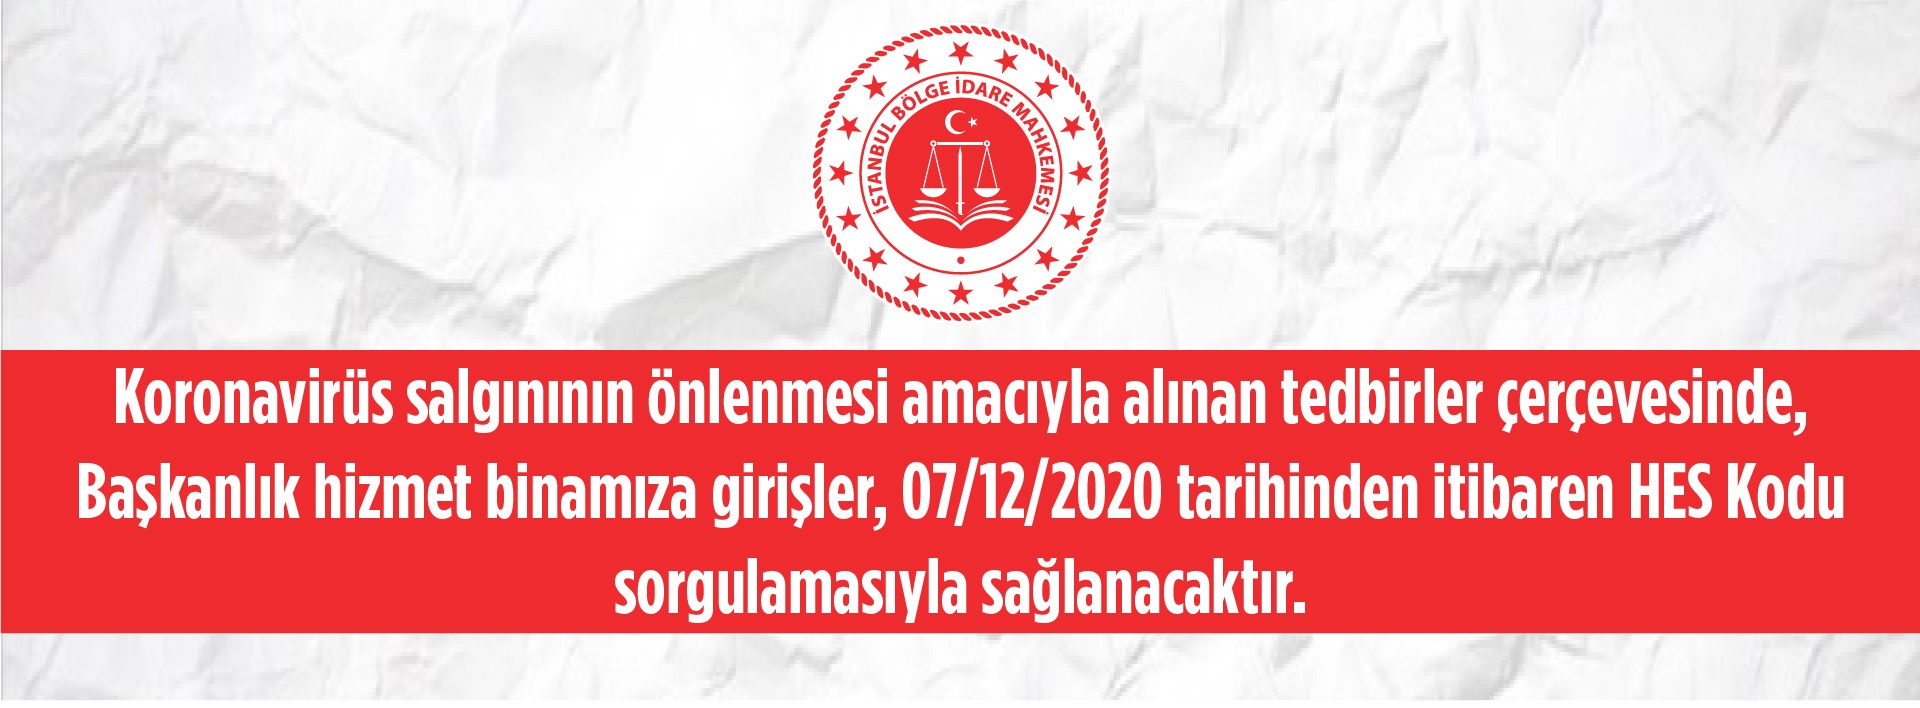 istanbul bolge idare mahkemesi